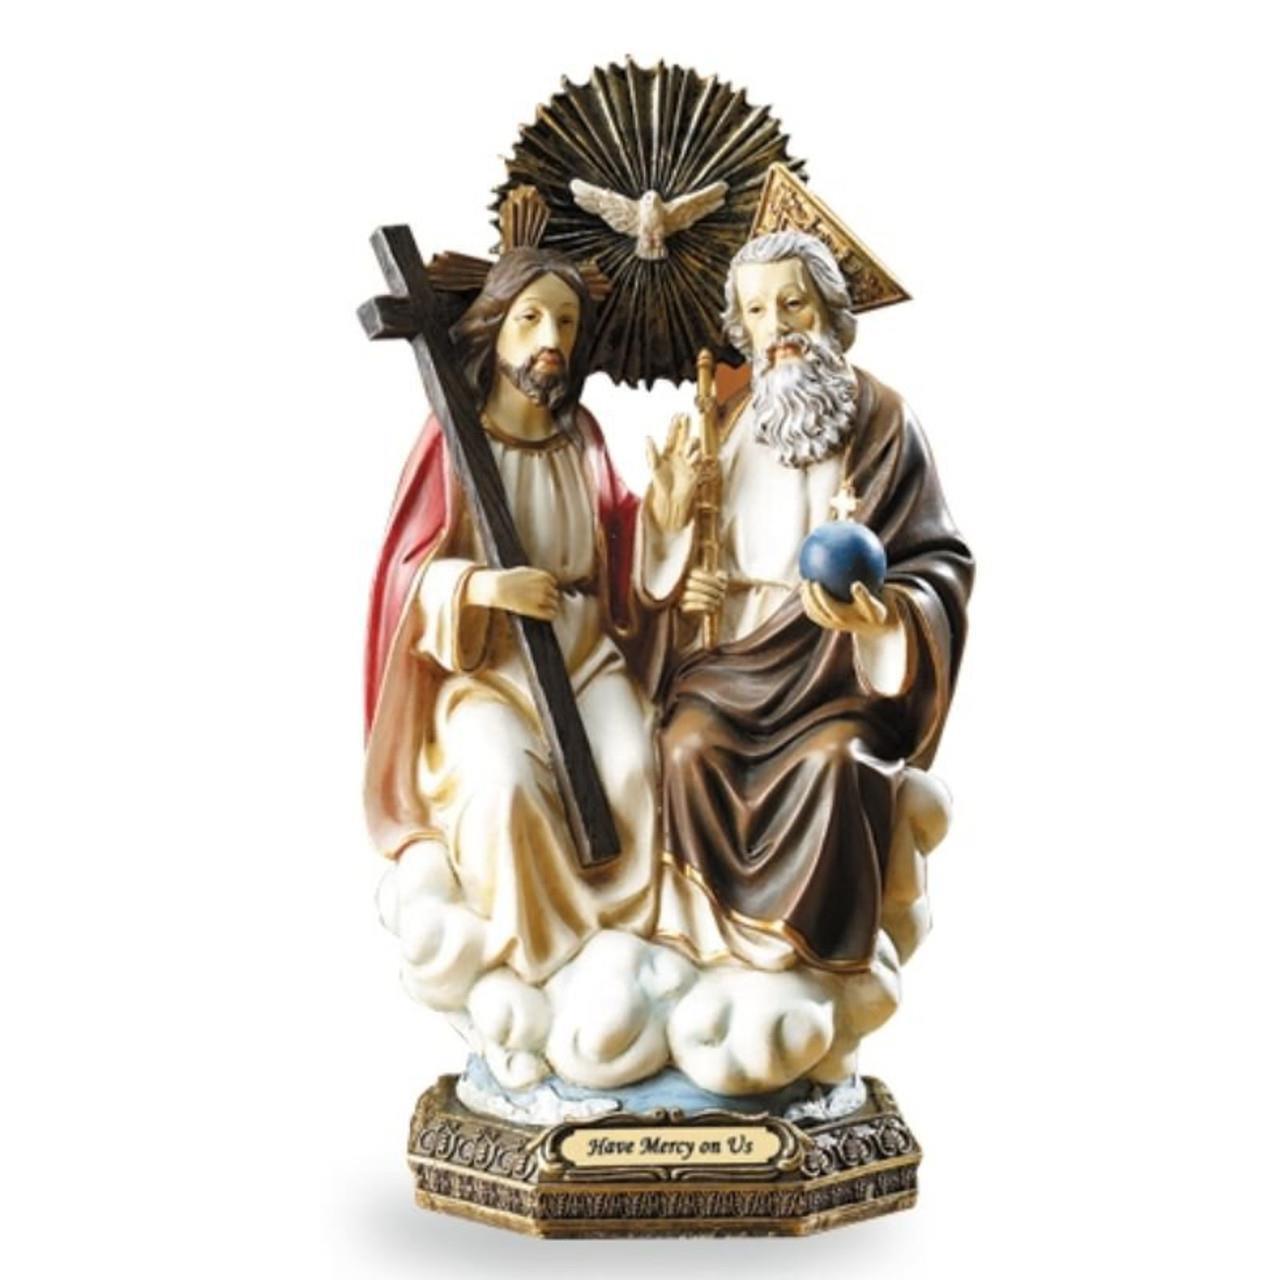 Holy Trinity Statue 8 Inch Tall Resin Christianity Catholic Religious Figurine